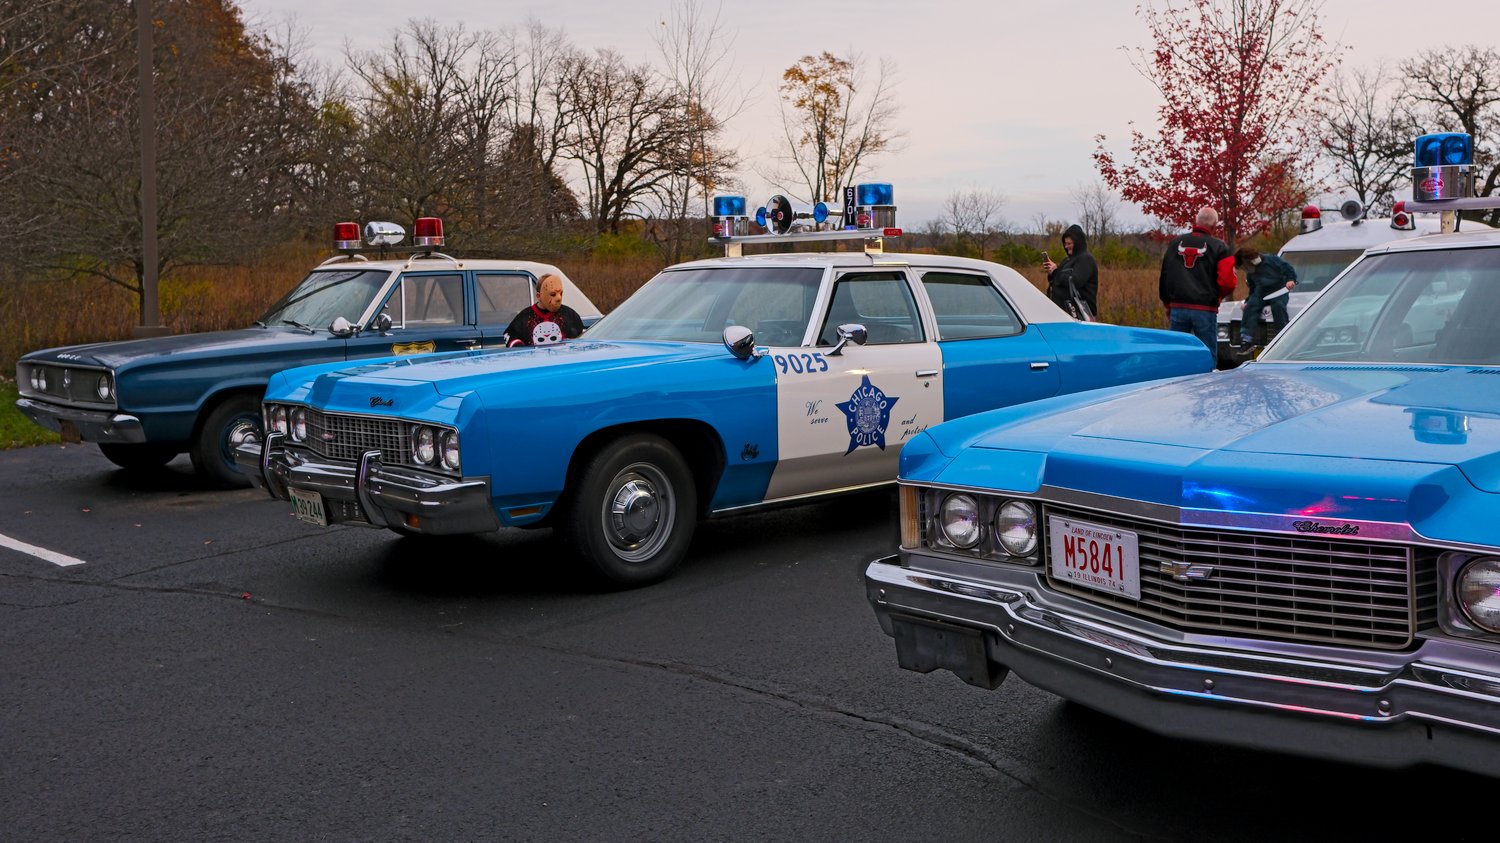 Vintage police cars on display.